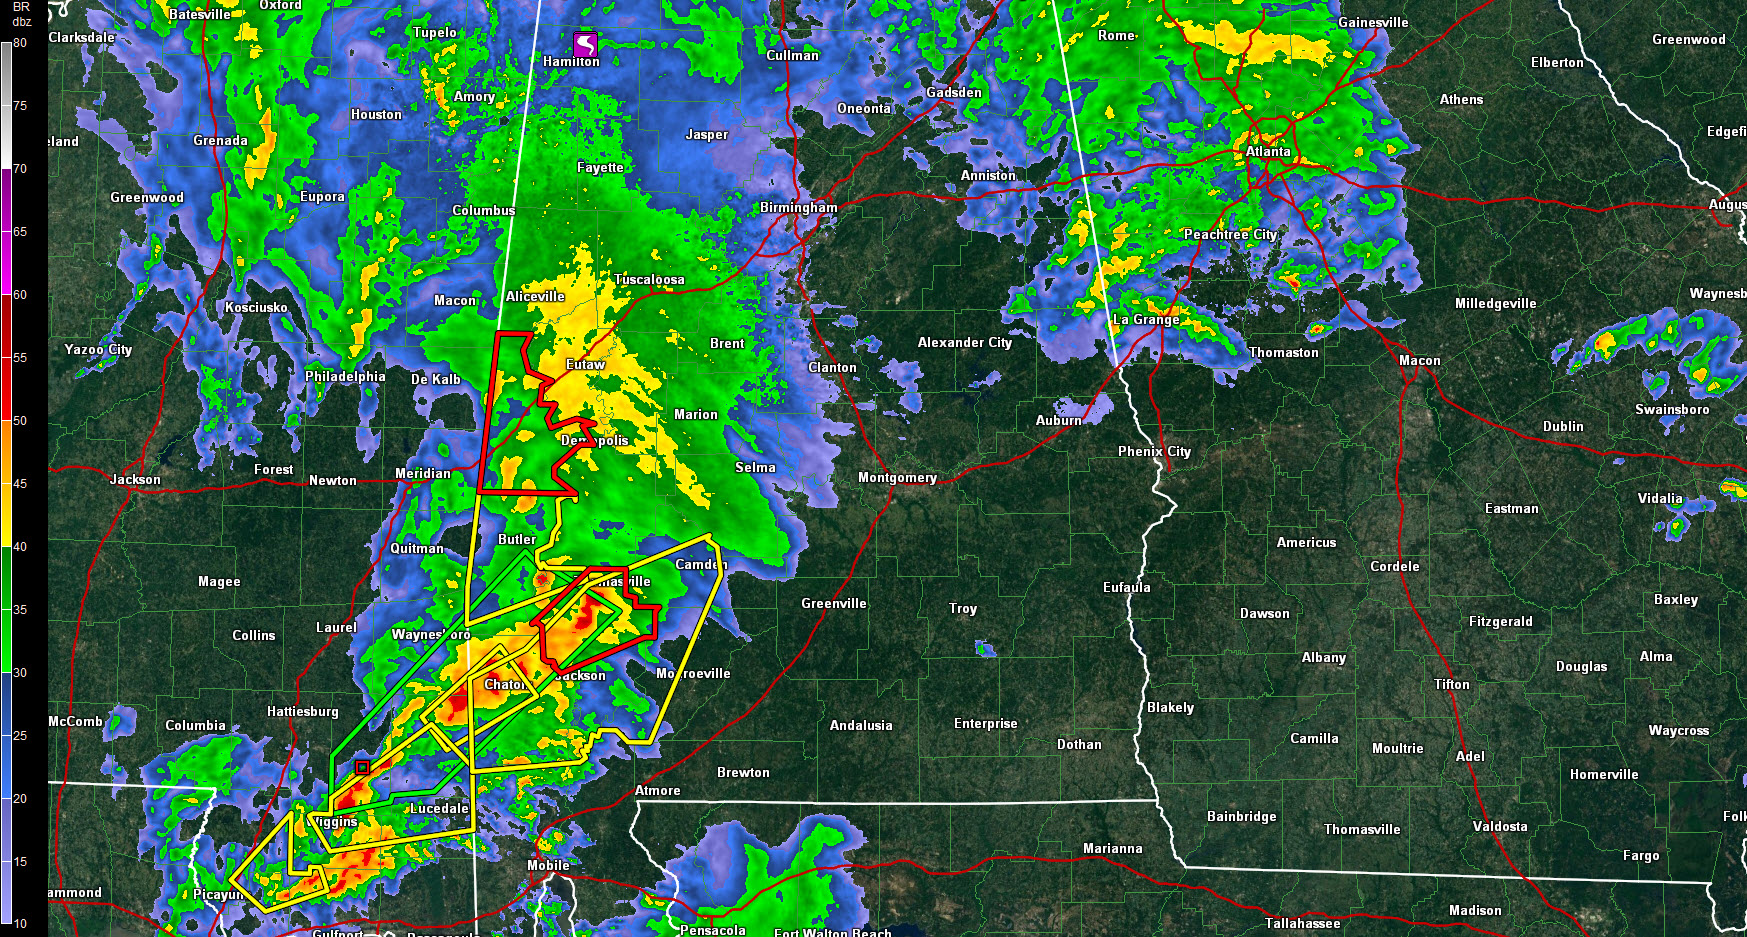 Radar Update at 6:45 p.m. : The Alabama Weather Blog